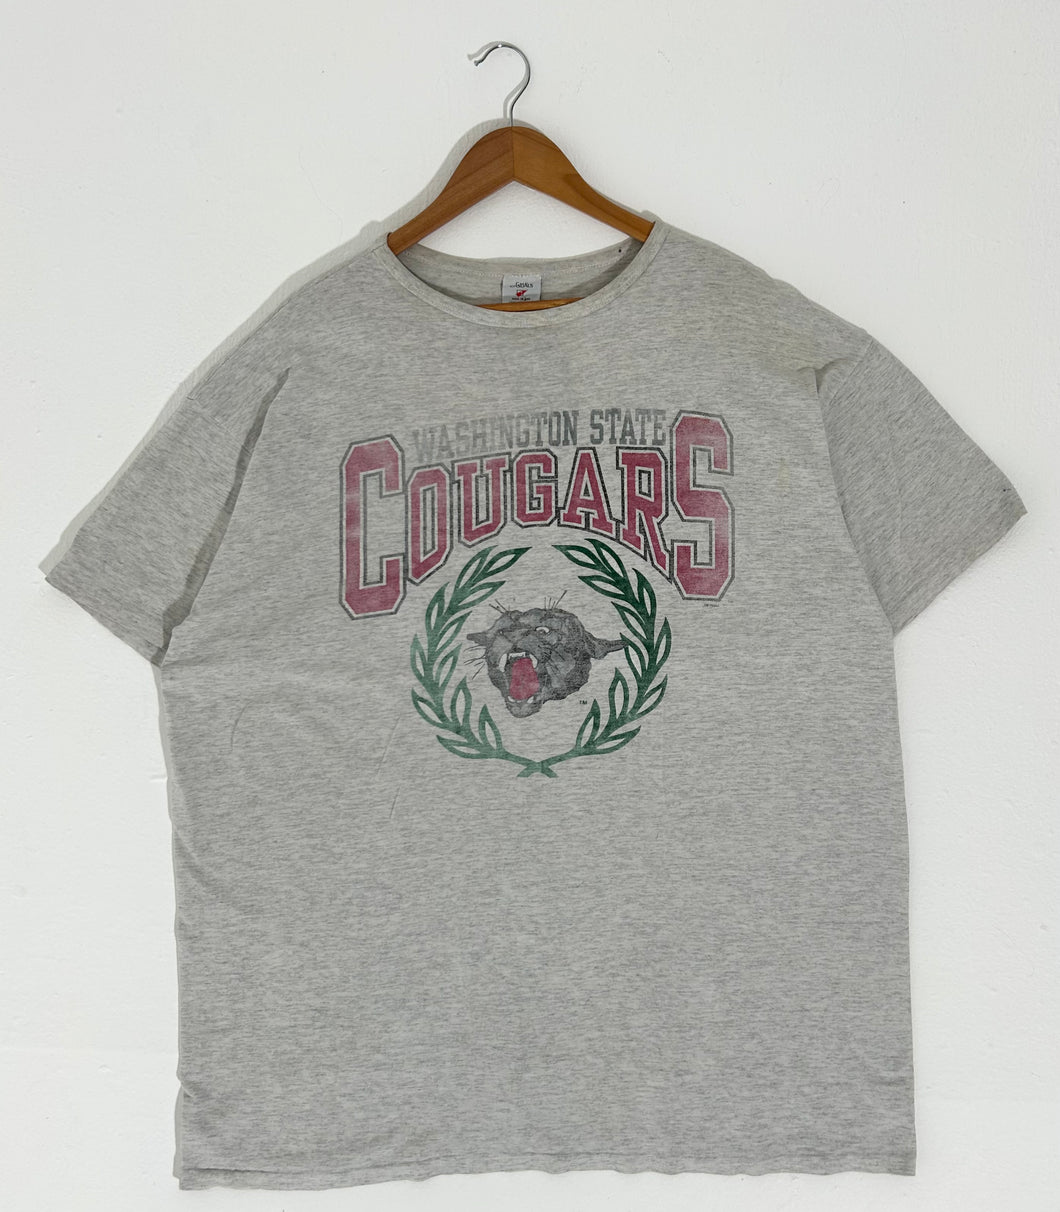 Vintage 1990's Washington State University Cougar T-Shirt Sz. XXL